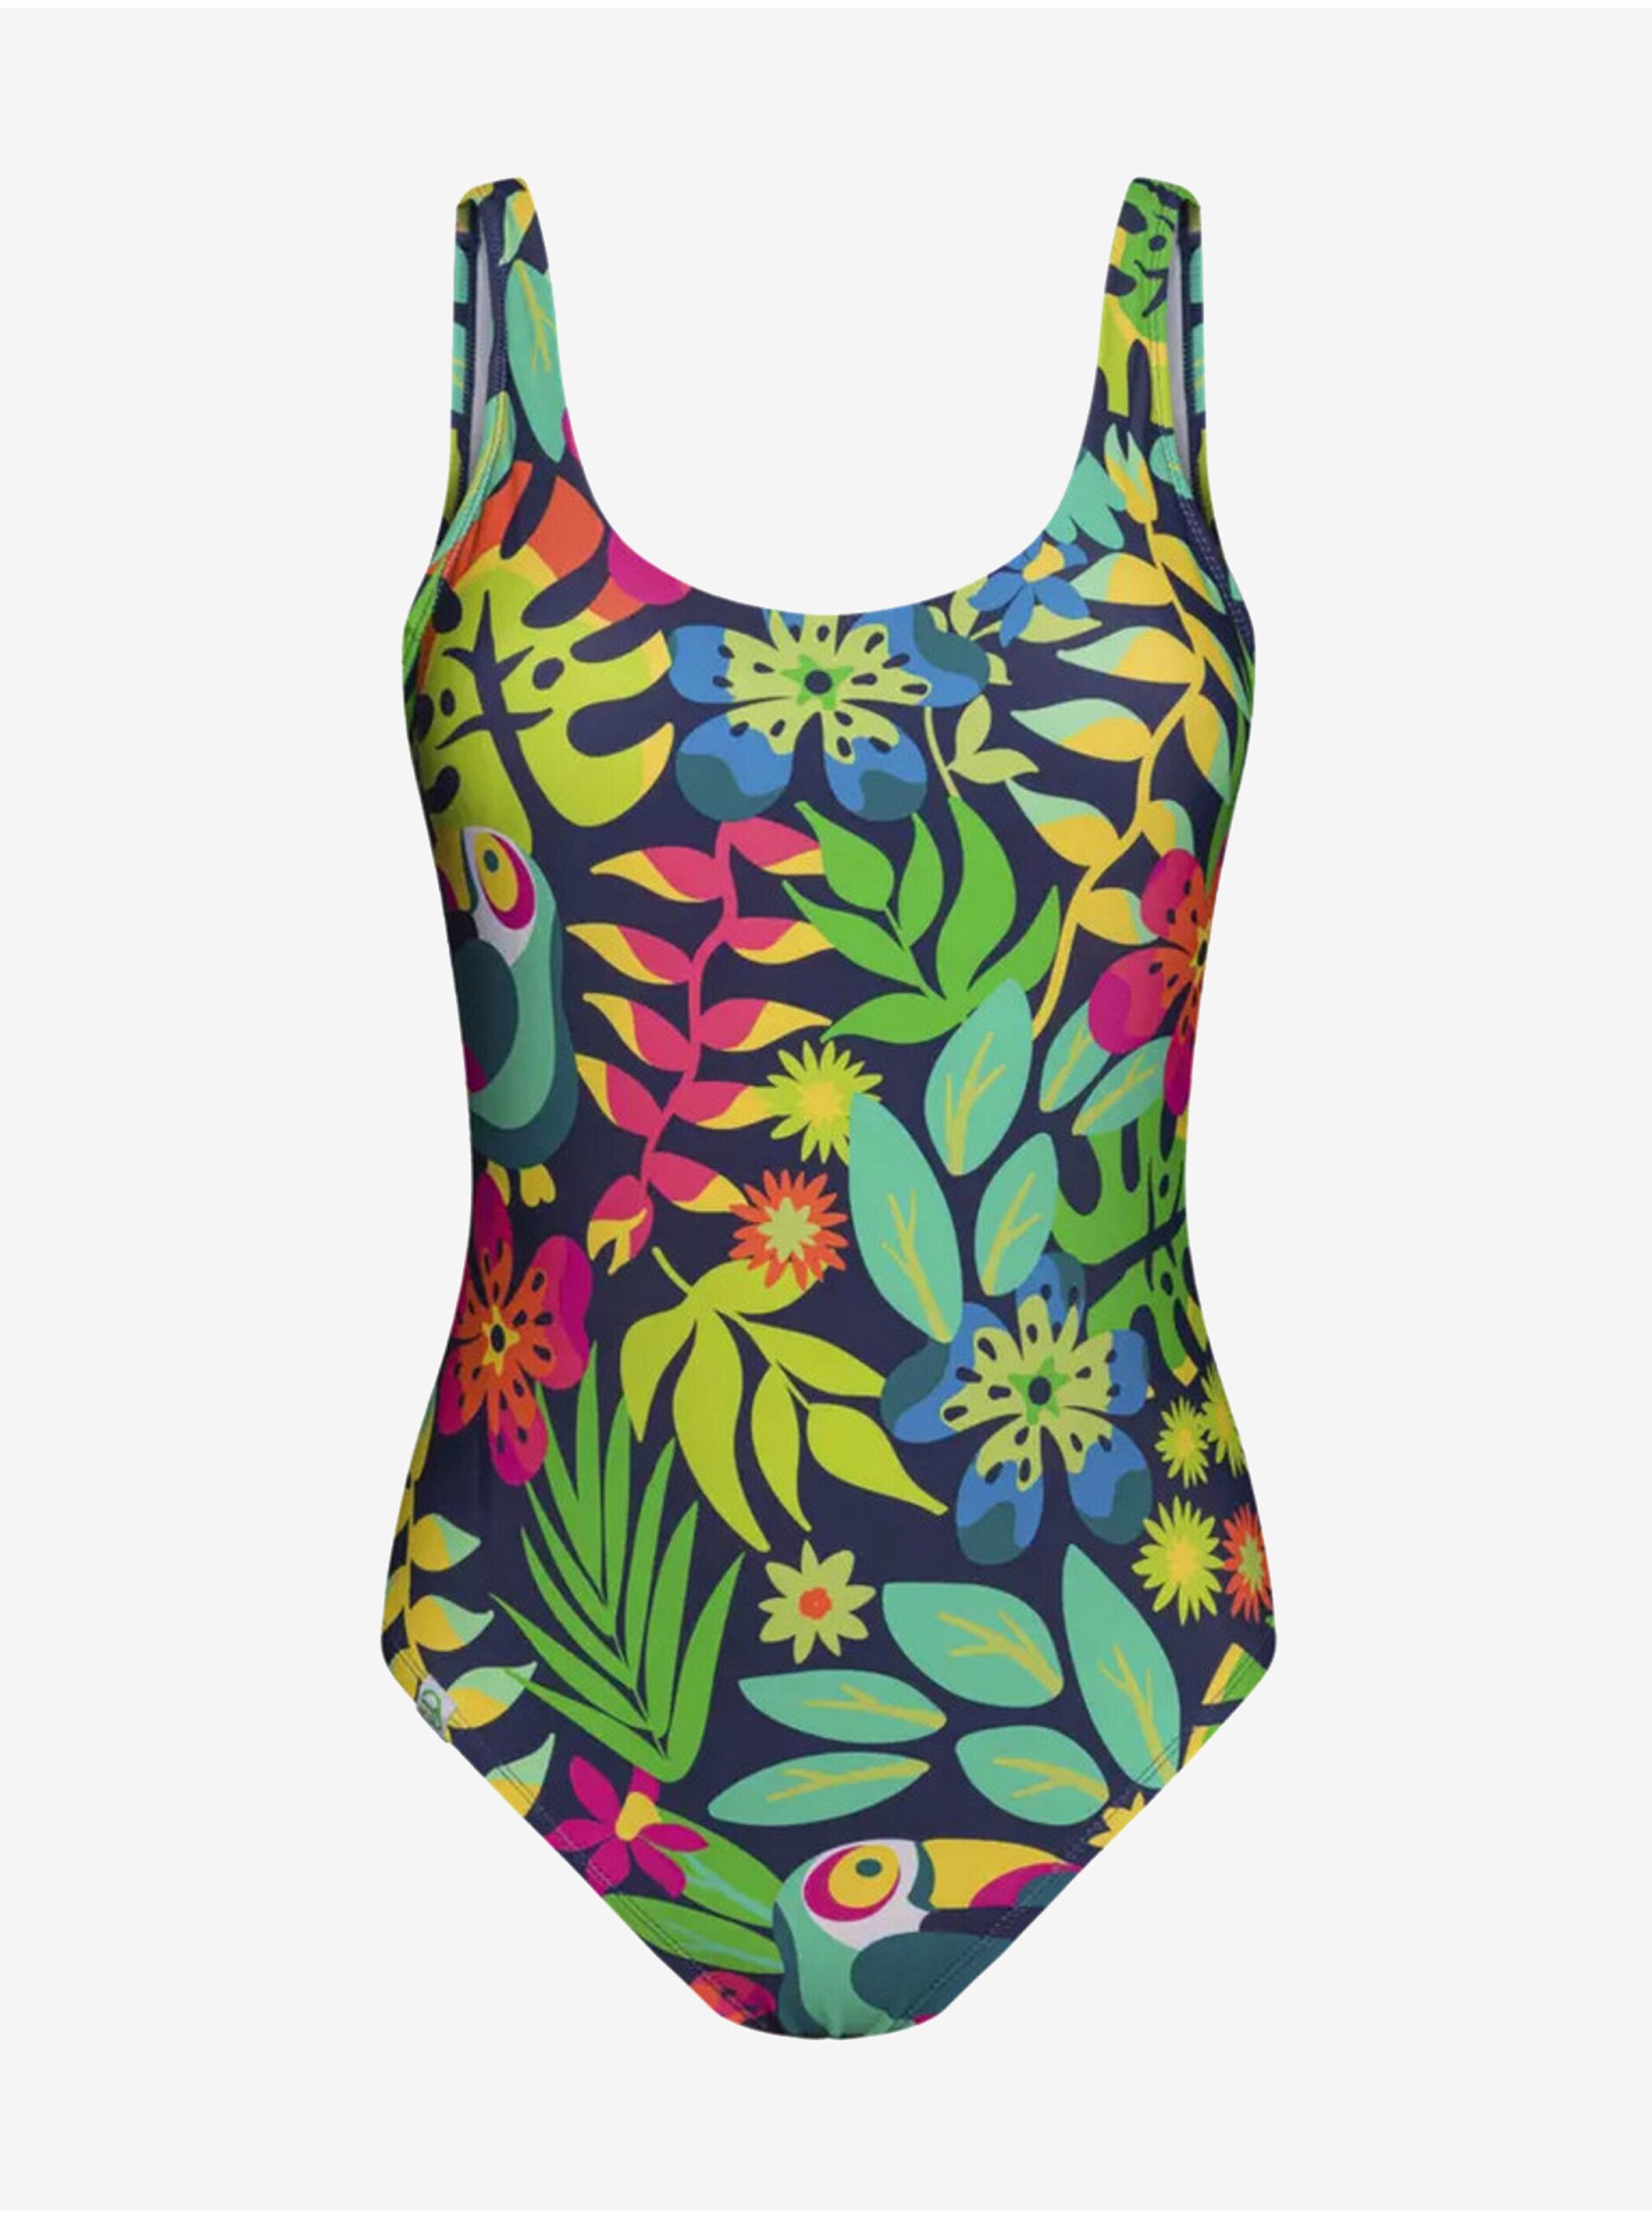 E-shop Modro-zelené dámské veselé jednodílné plavky Dedoles Tukan v džungli